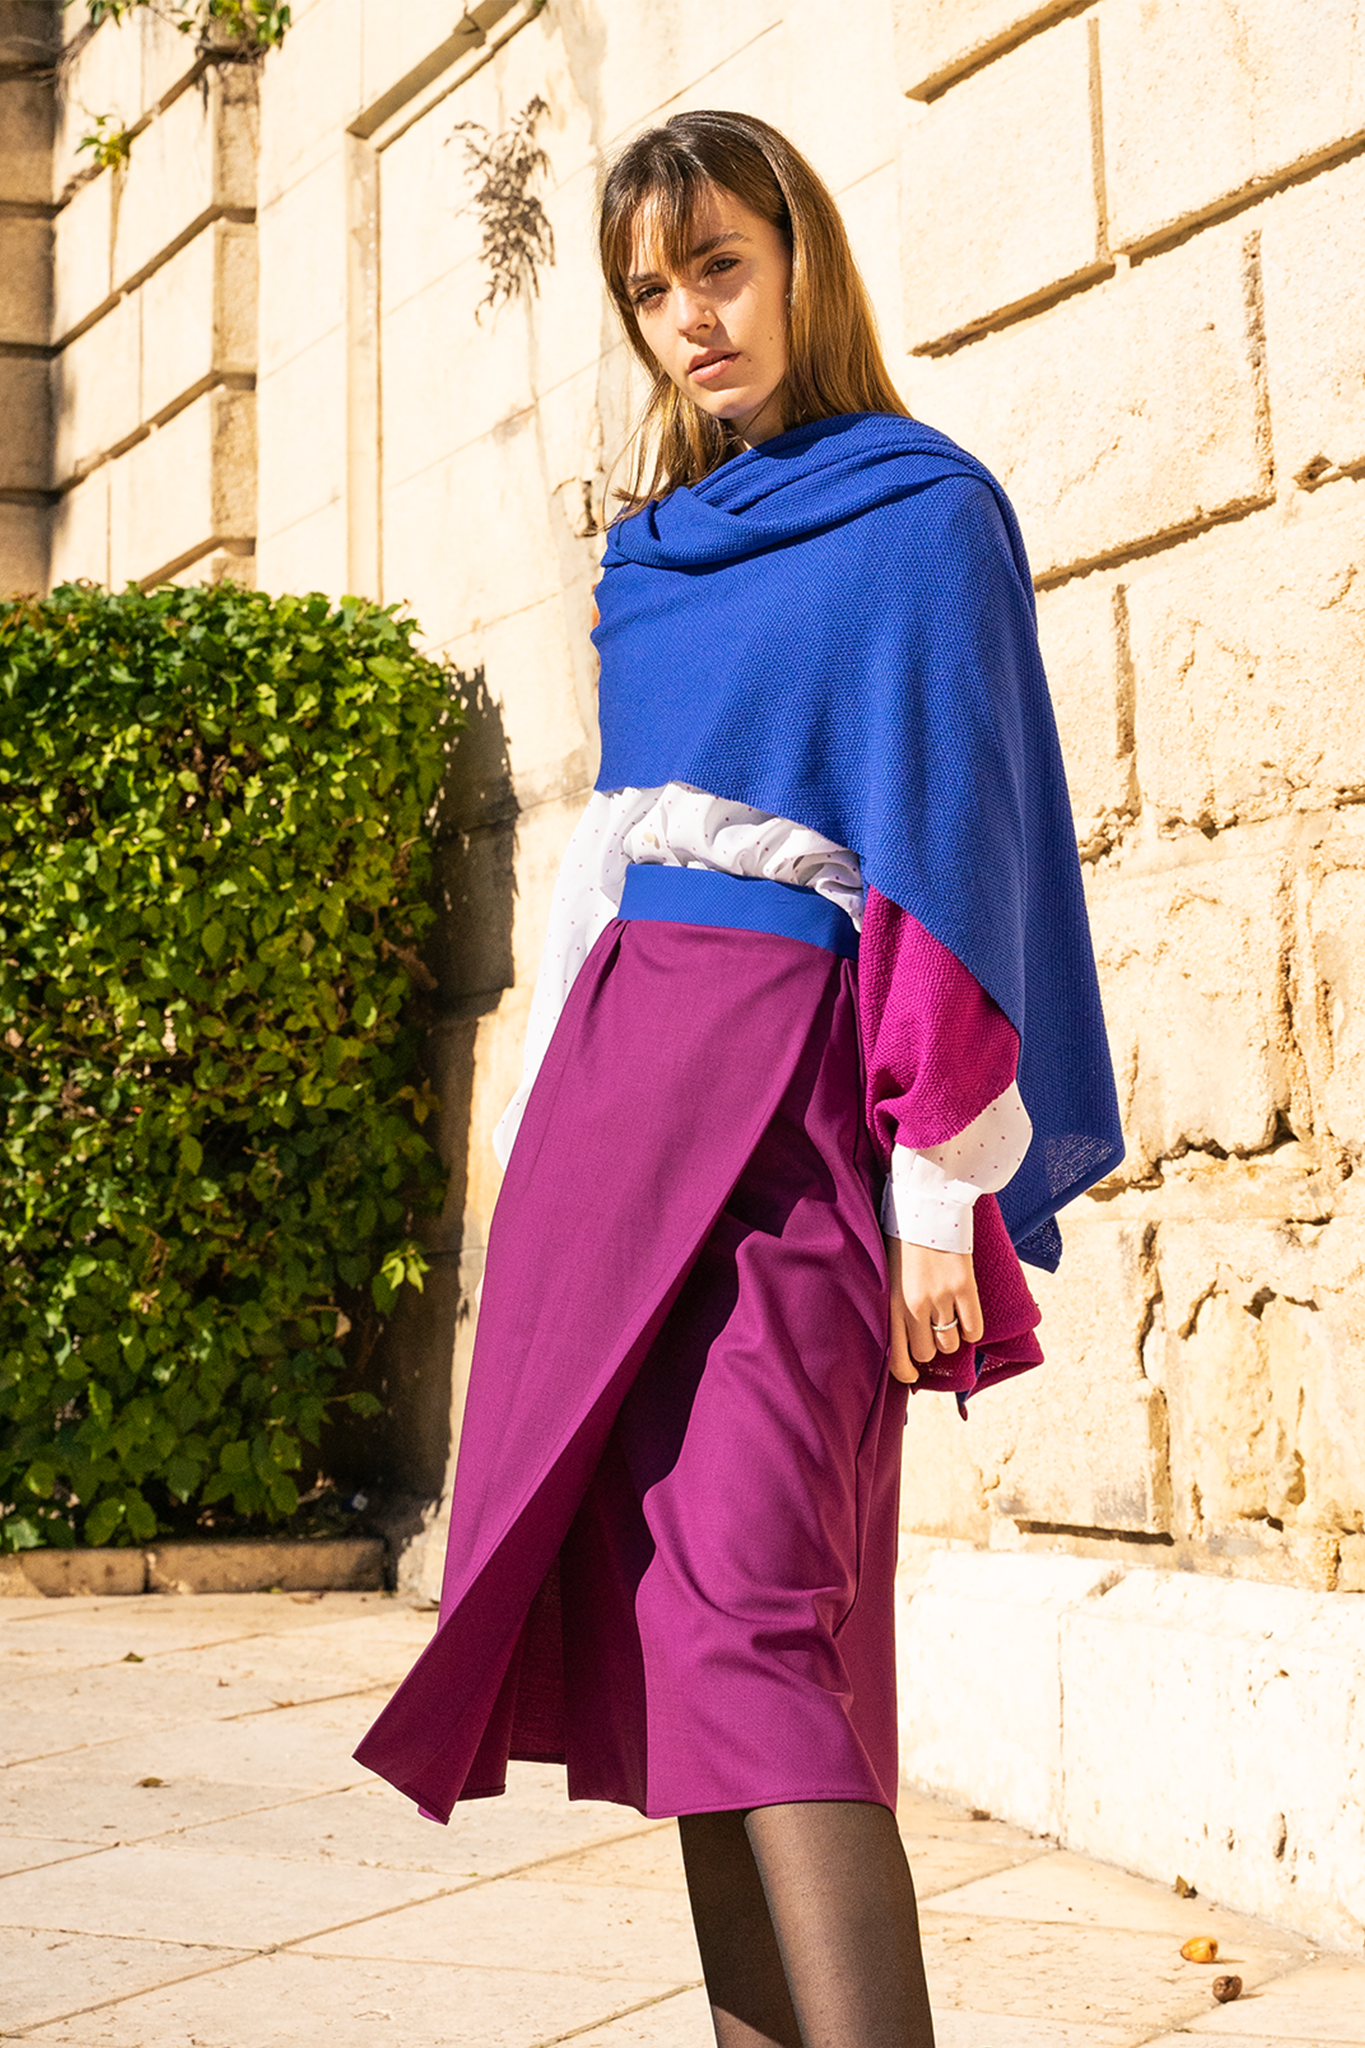 Mosaico - Gonna a portafoglio in fresco lana viola con cintura a nastro azzurra